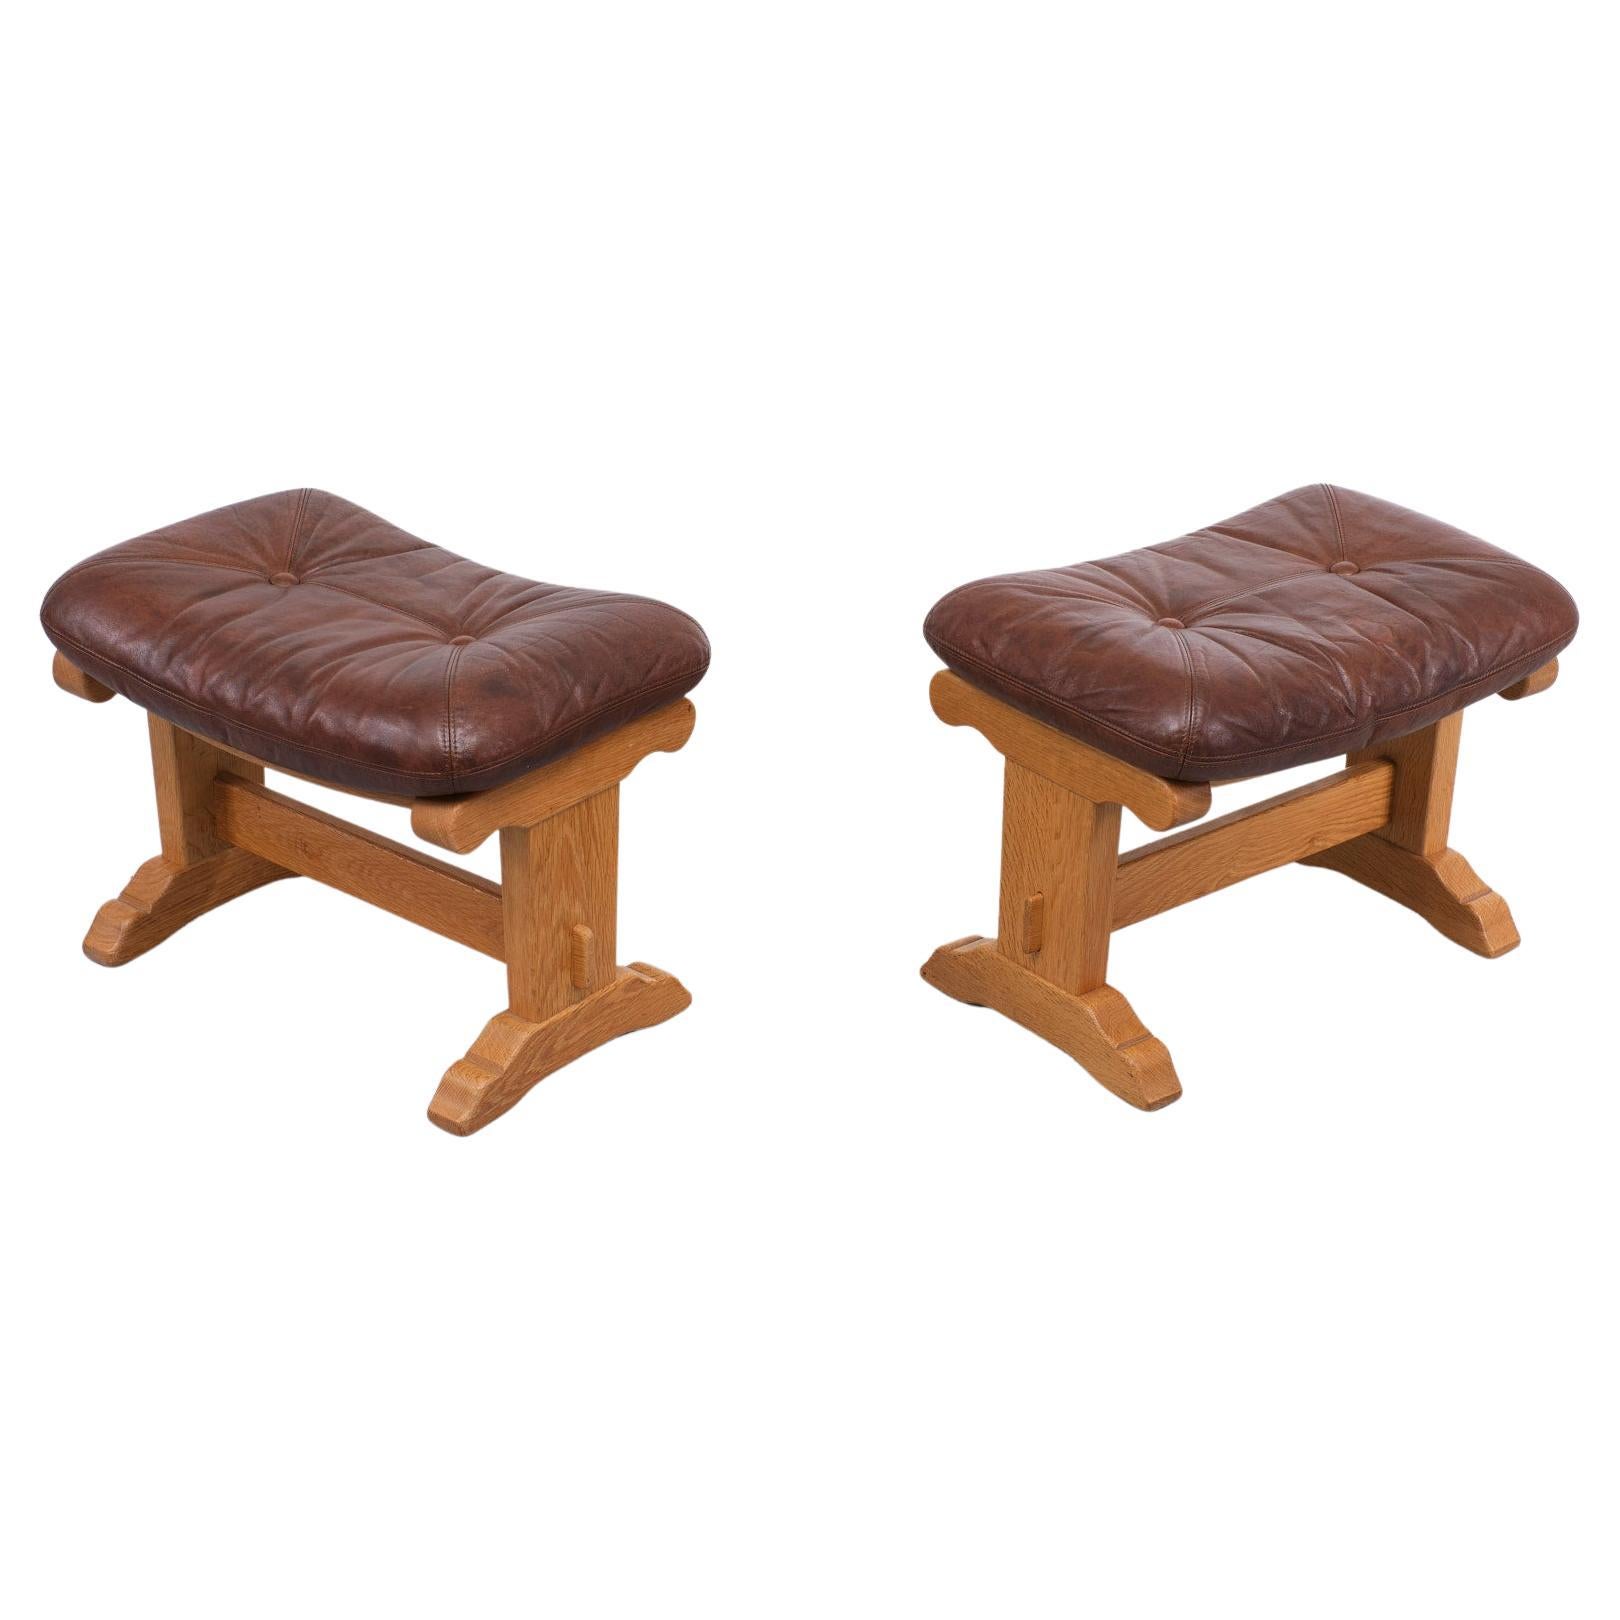 Small Wood Footstool - 68 For Sale on 1stDibs